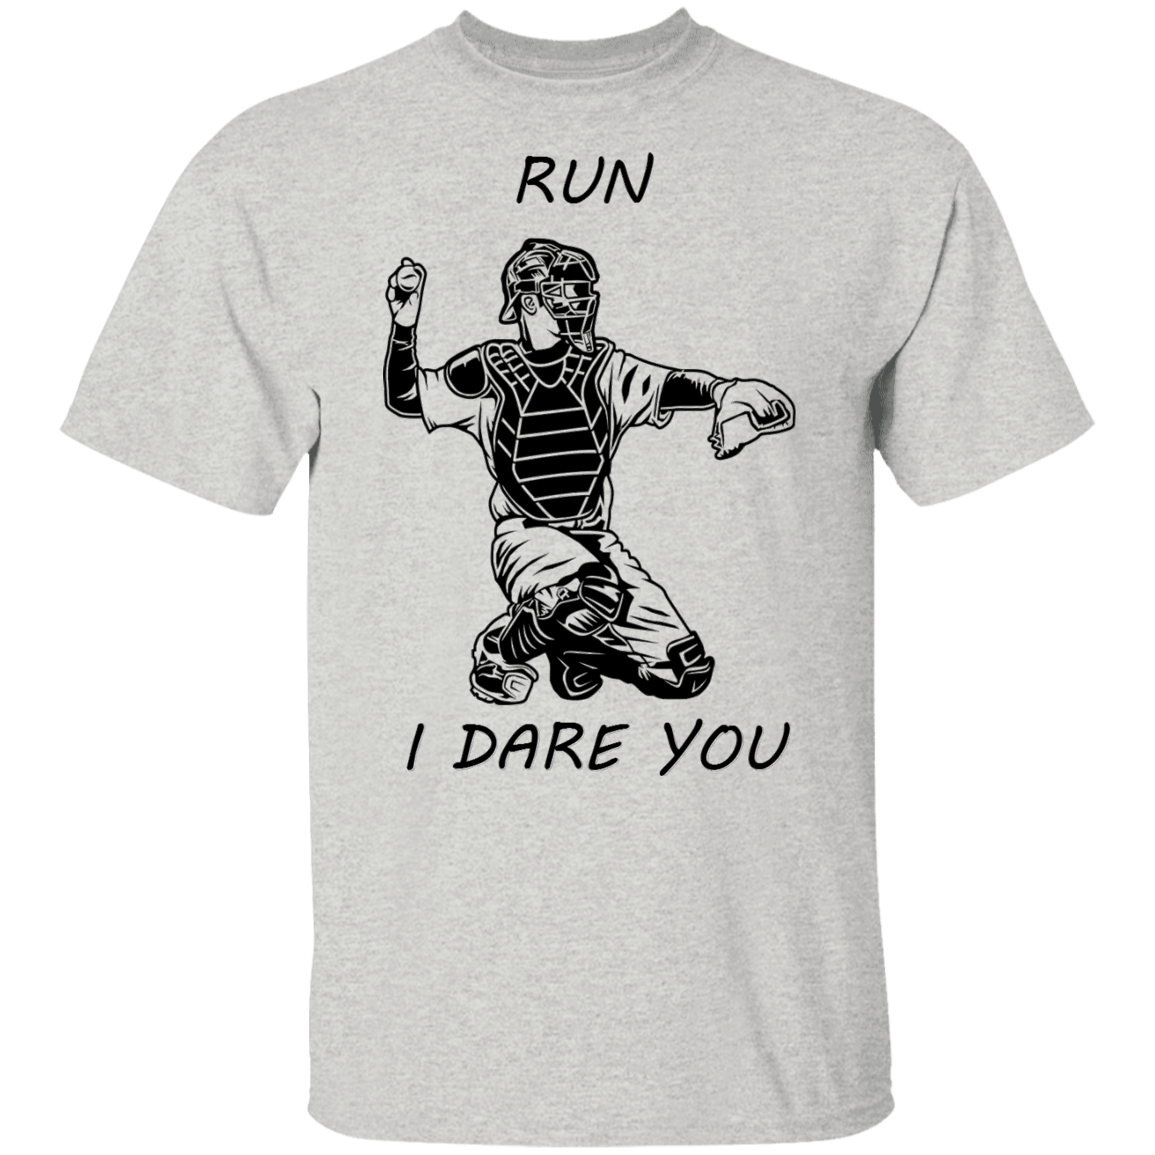 Baseball catcher - run - T-Shirt (youth)